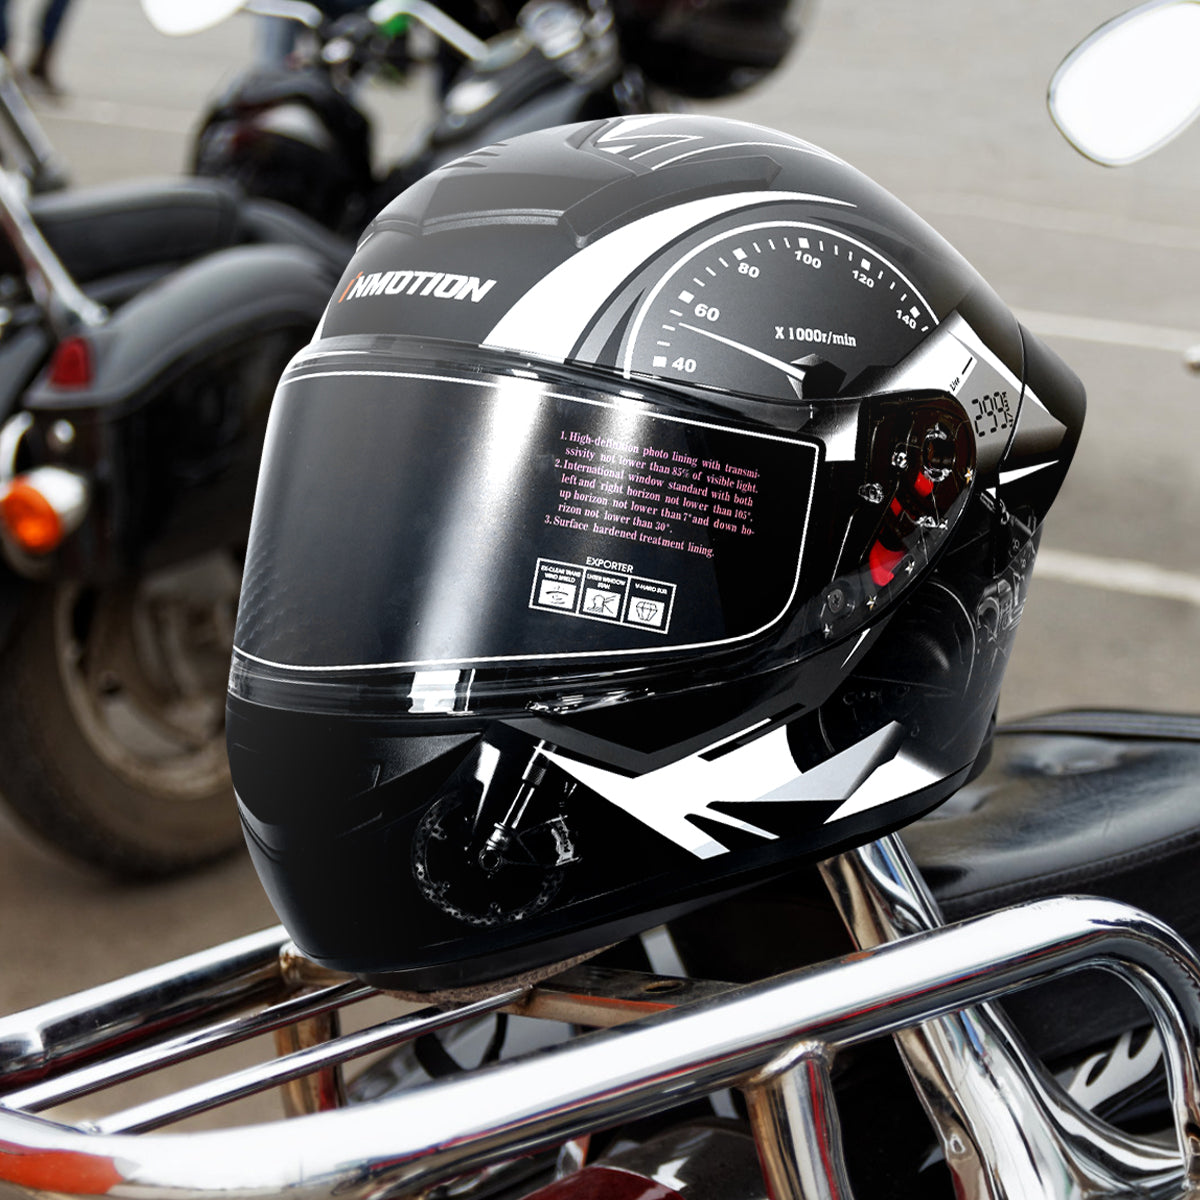 Motorcycle Full Face Helmet